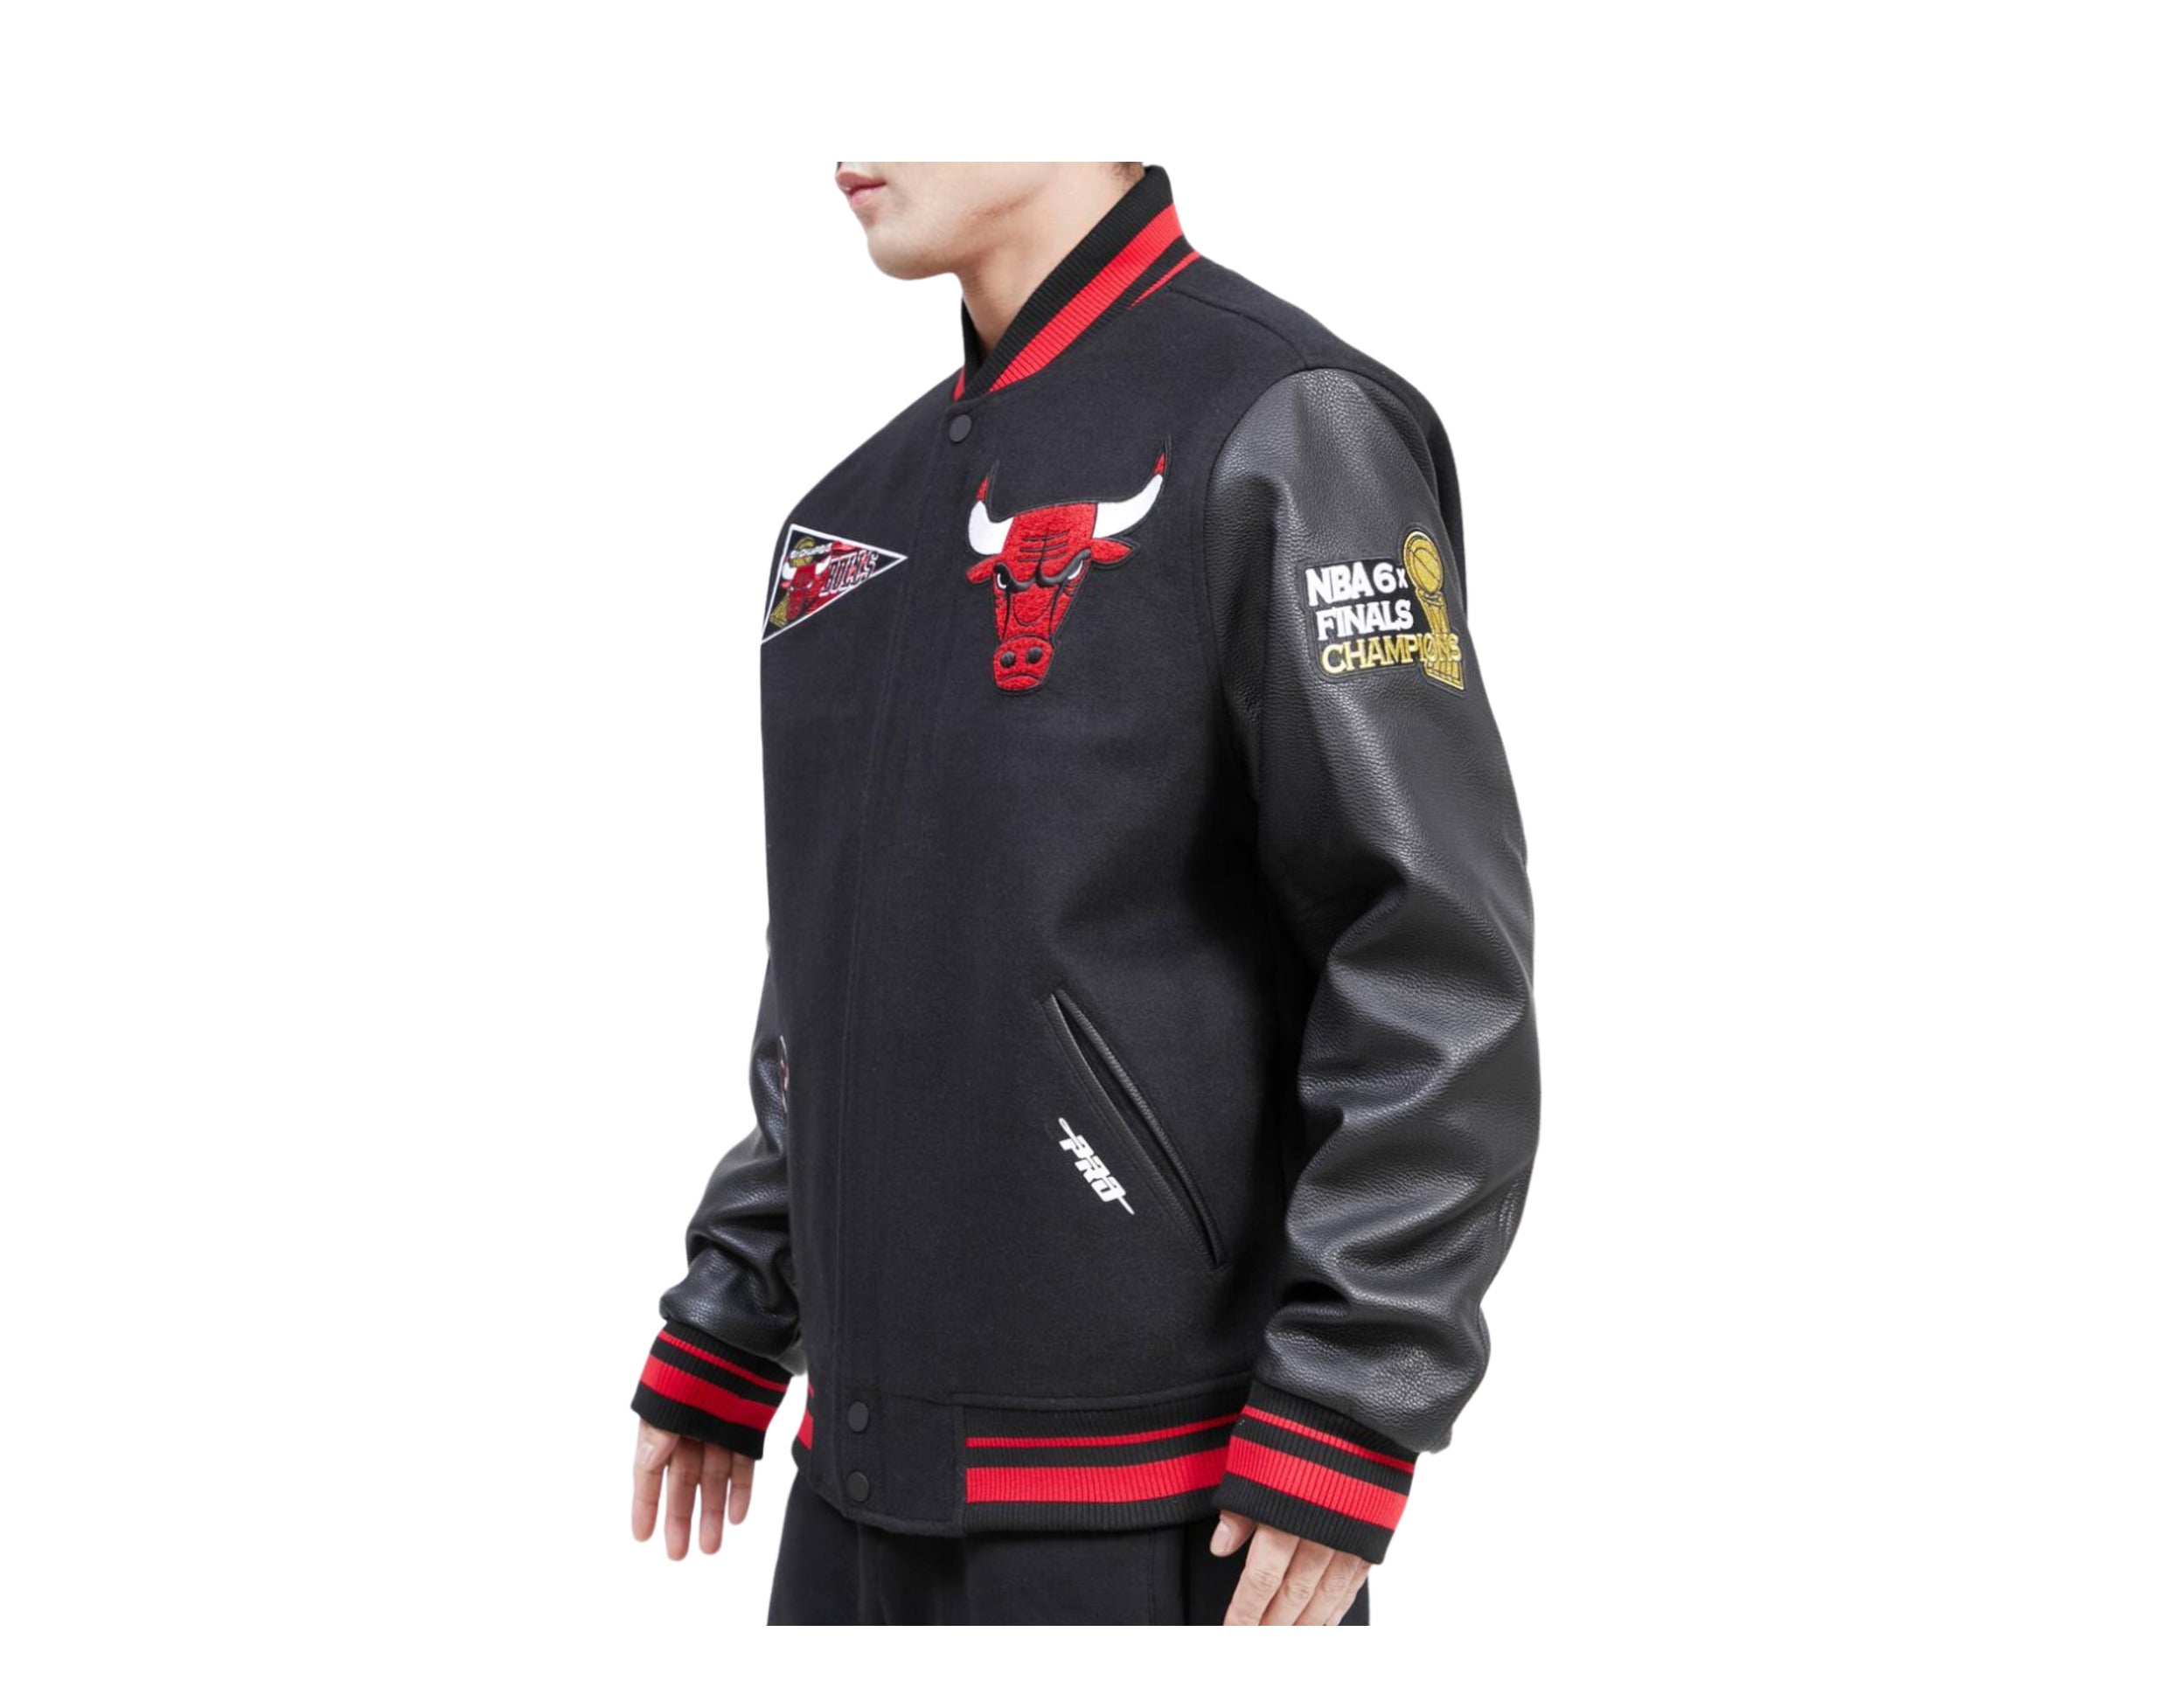 Chicago Bulls Retro Pro Standard Retro Classic Wool Varsity Jacket